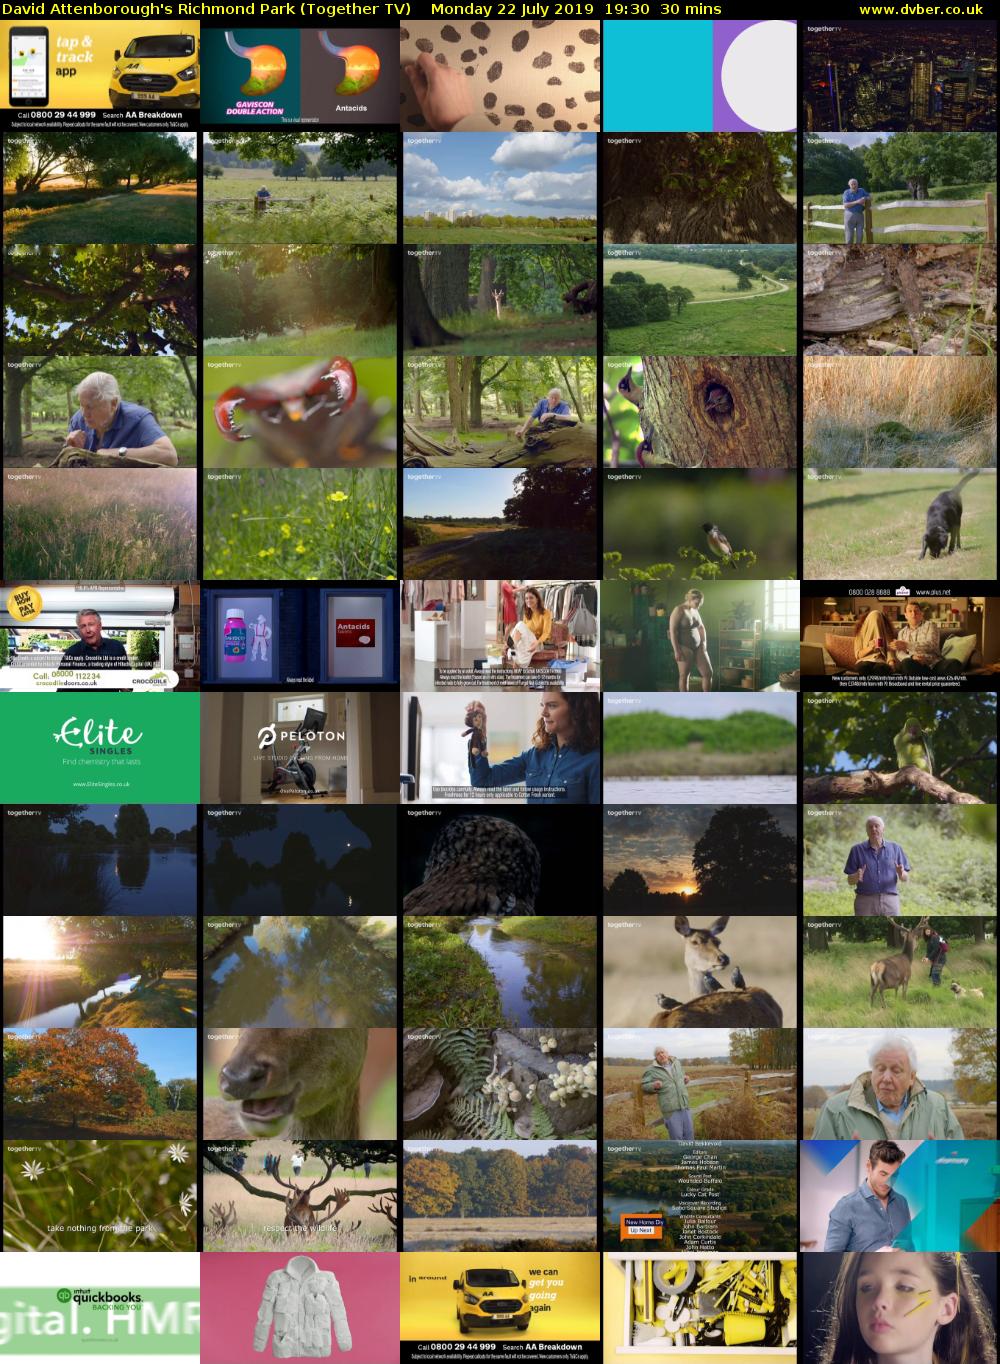 David Attenborough's Richmond Park (Together TV) Monday 22 July 2019 19:30 - 20:00